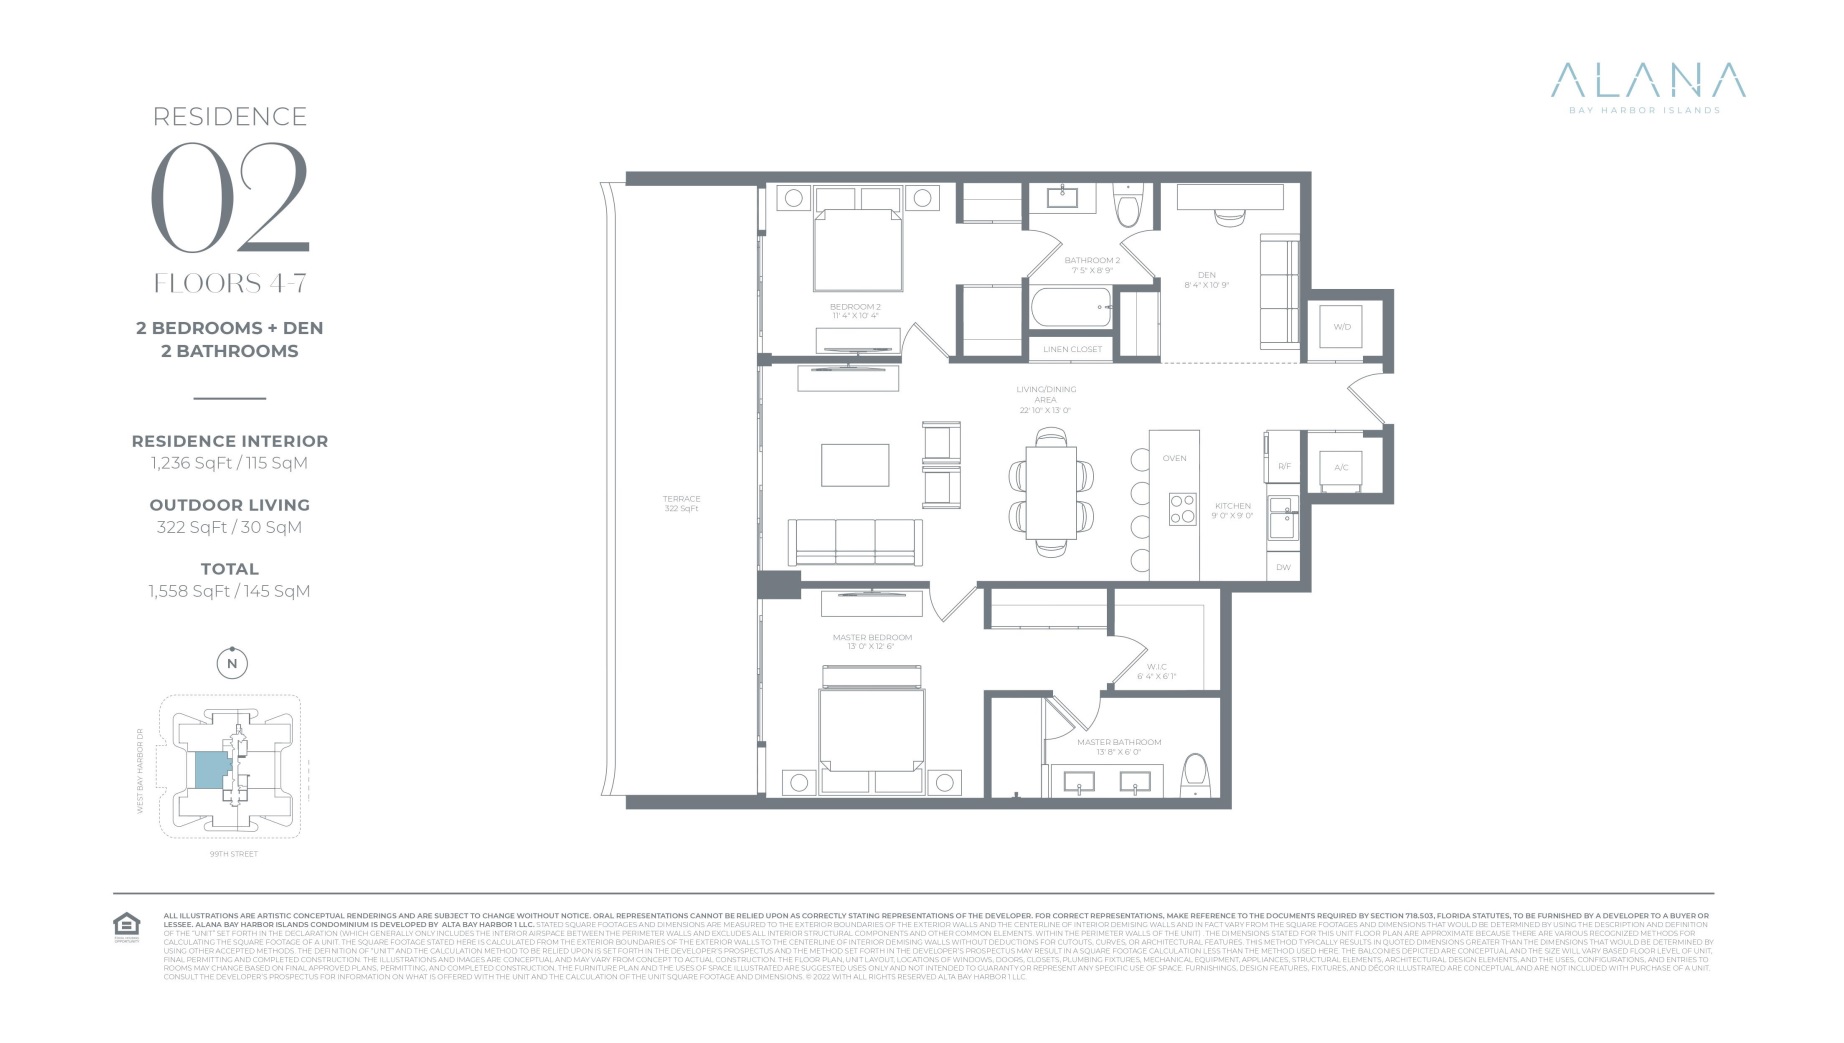 Alana_Floorplan_Residence02_floor4-7_2bed+den_2bath